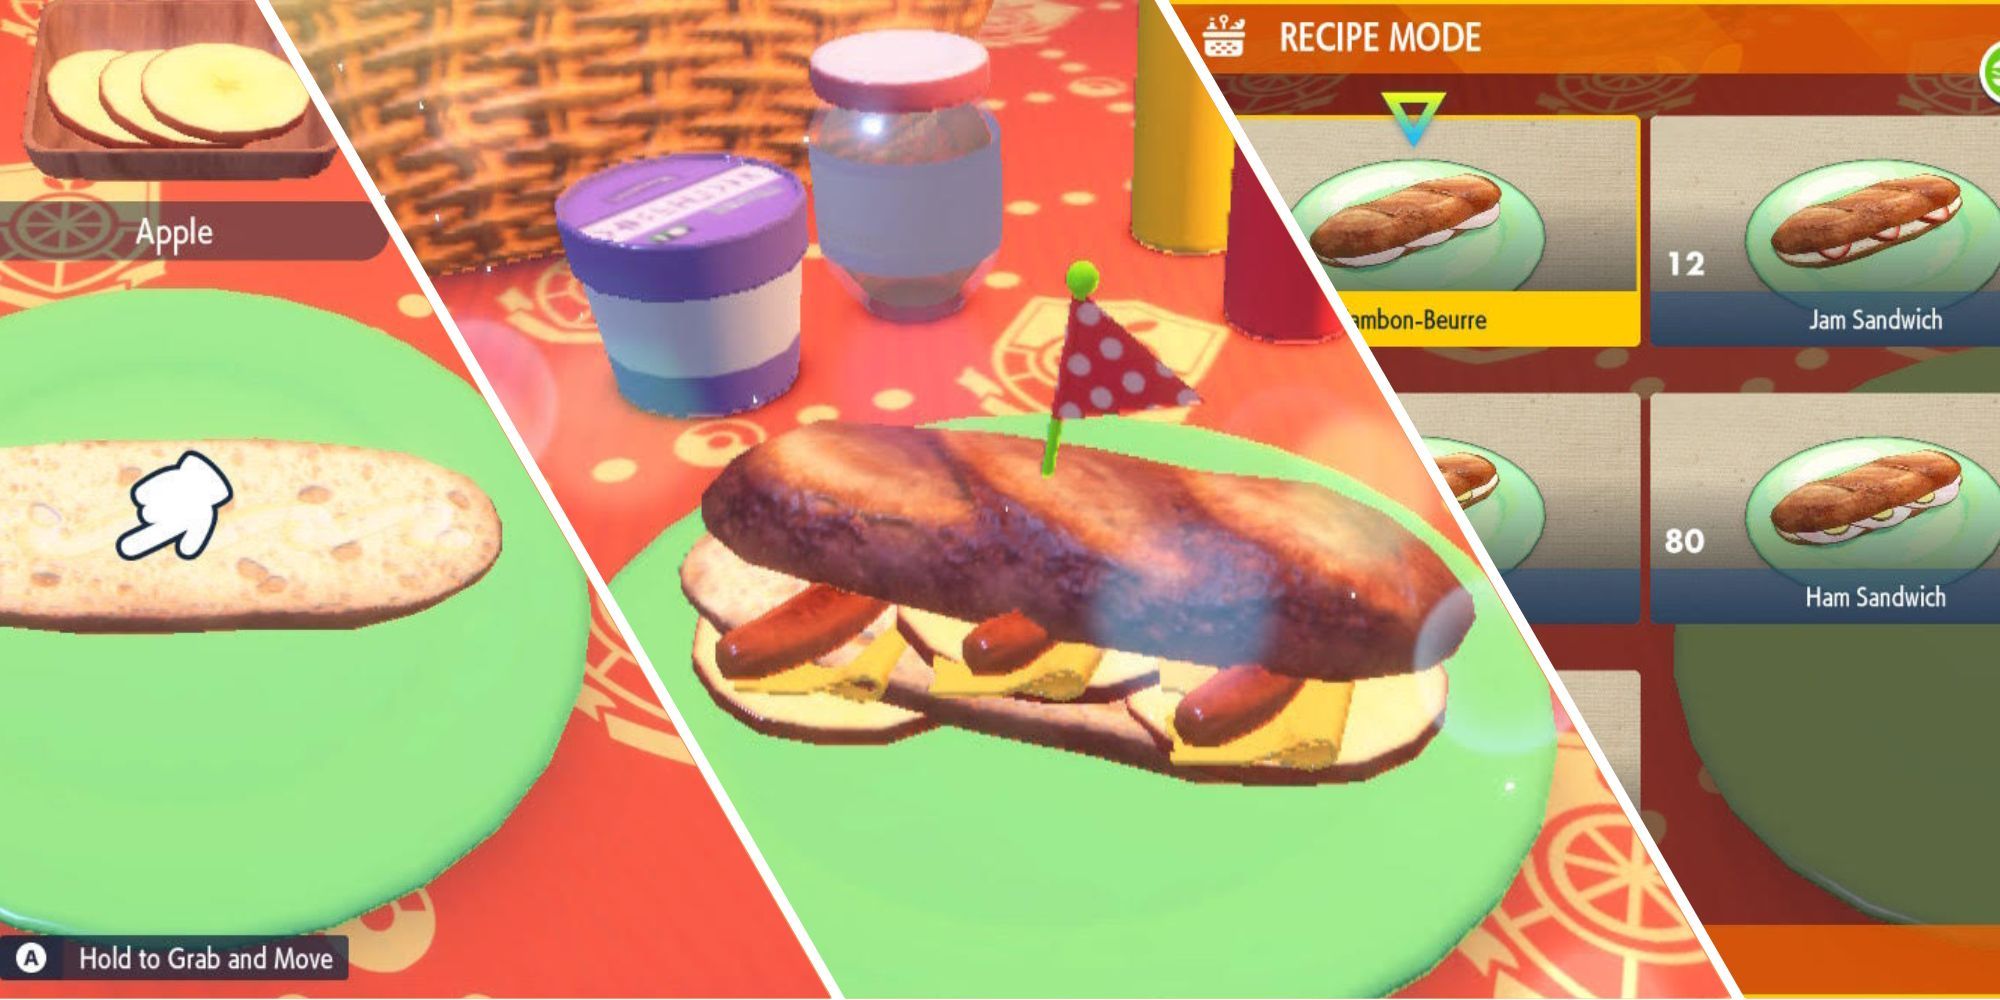 Split image of sandwich making, a finished sandwich, and the recipe menu in Pokémon Scarlet & Violet.